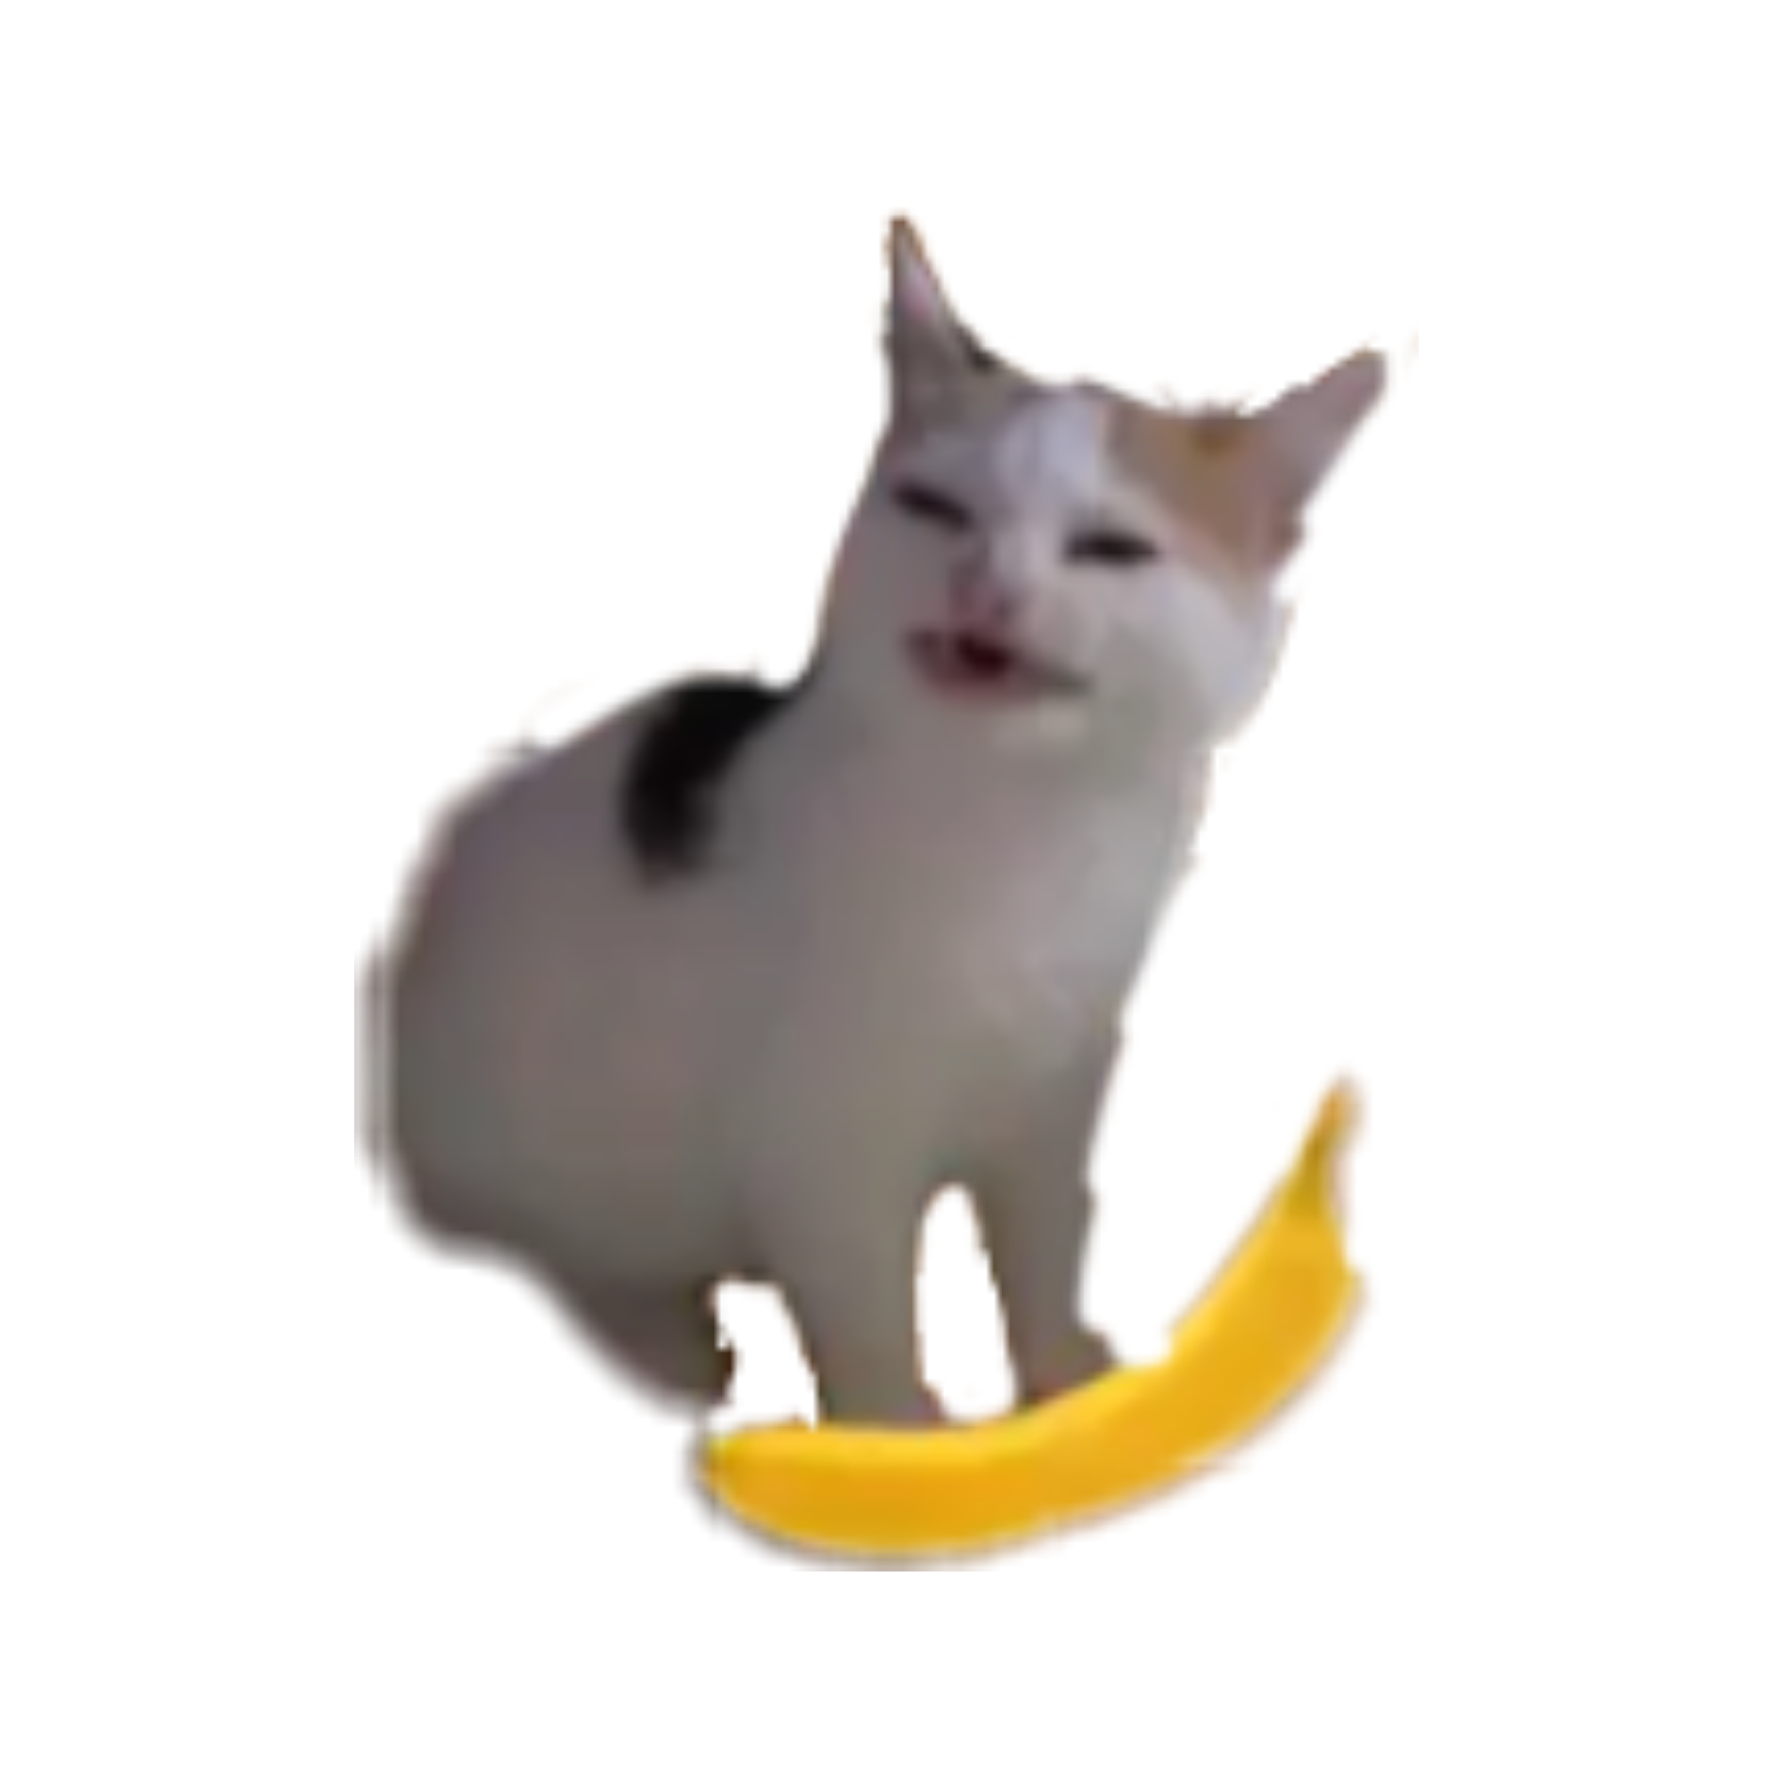 cat banana bananatime 273044350007211 by @queen_galaxy1o1.